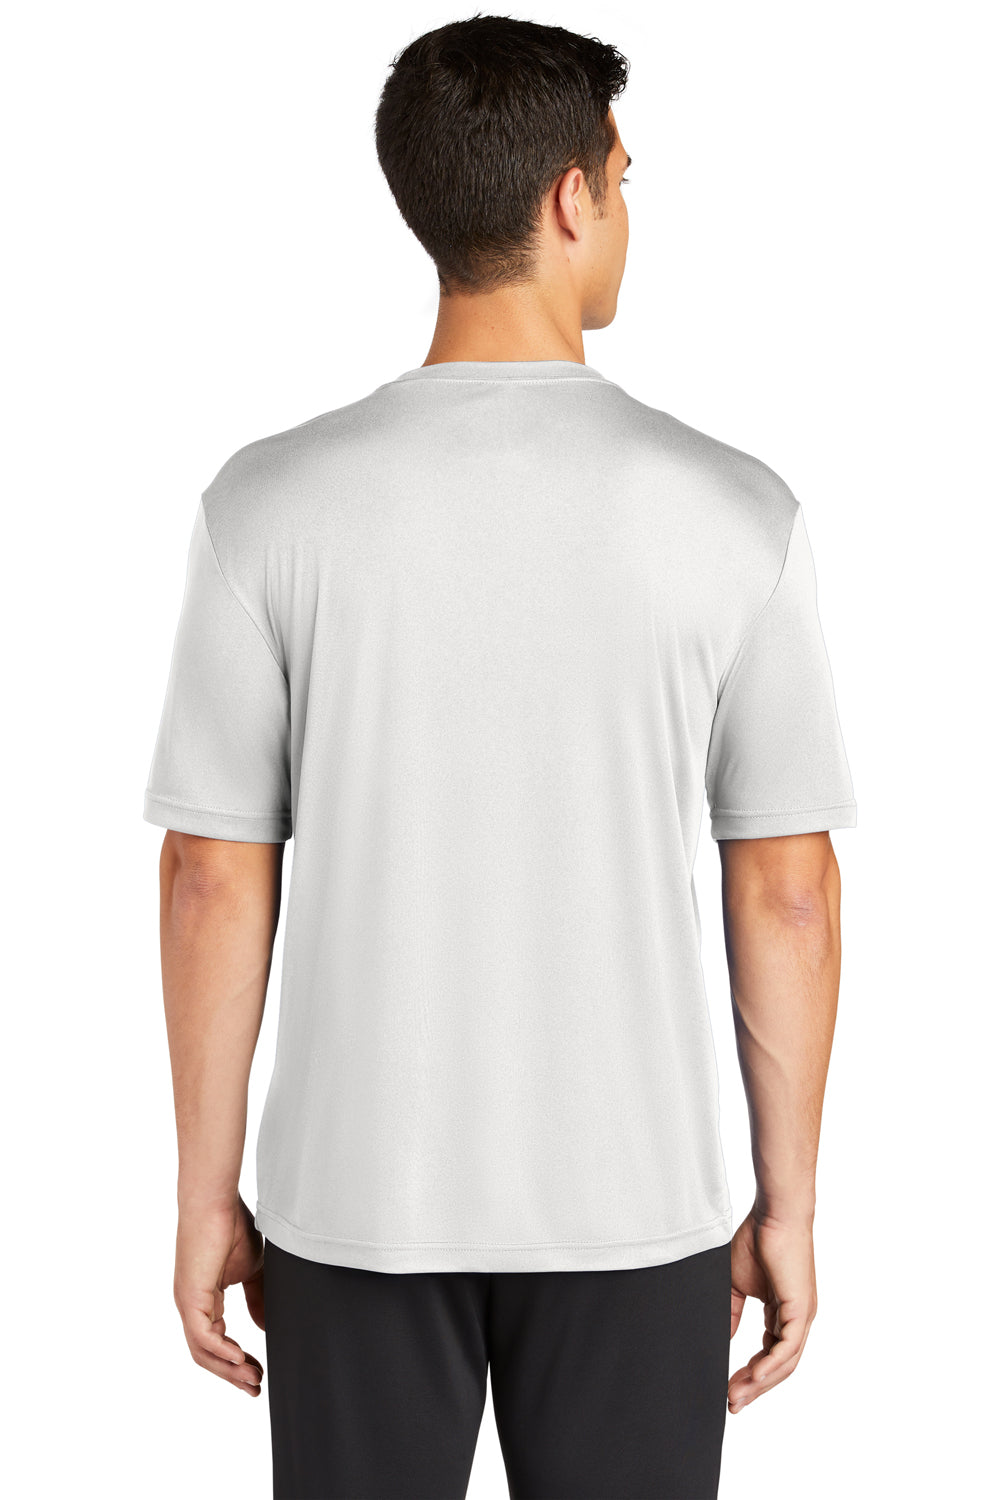 Sport-Tek ST350 Mens Competitor Moisture Wicking Short Sleeve Crewneck T-Shirt White Back